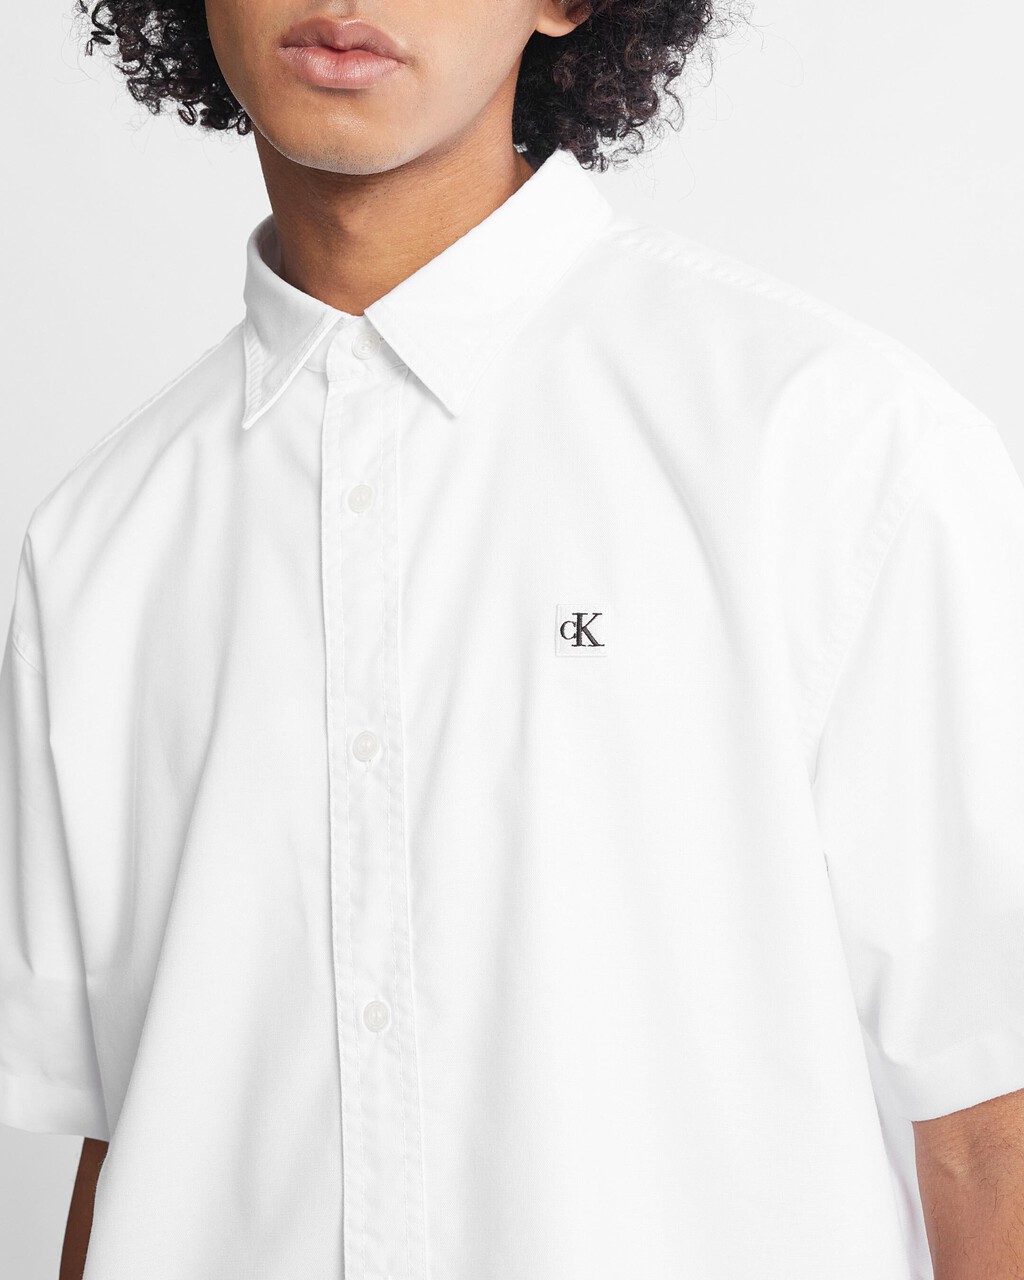 Ck 徽章 Coolmax 牛津襯衫, Bright White, hi-res